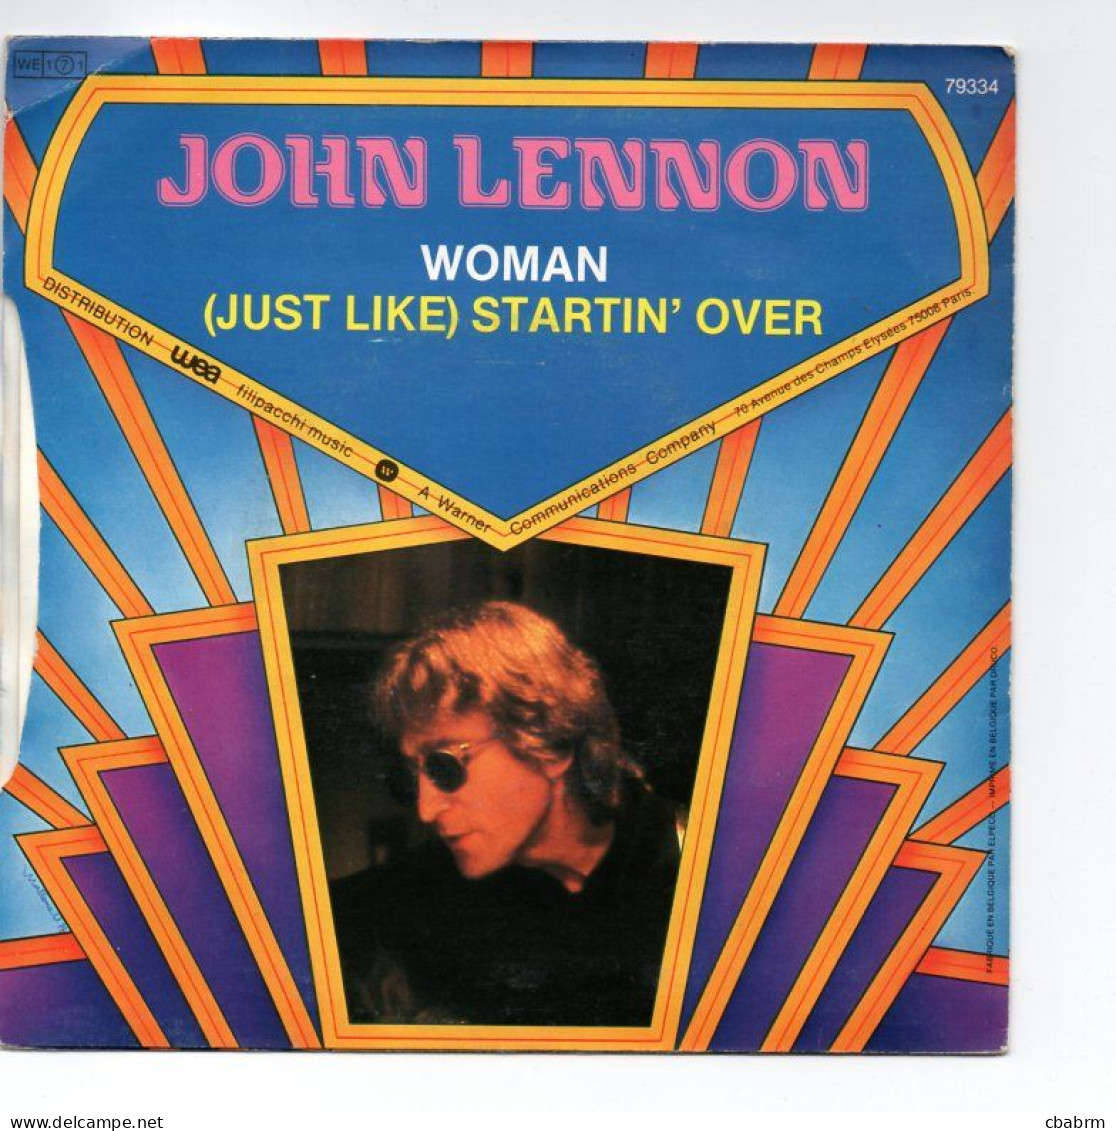 SP 45 TOURS JOHN LENNON WOMAN N° 23 WEA GEF 79334 BELGIQUE - 7" - Rock